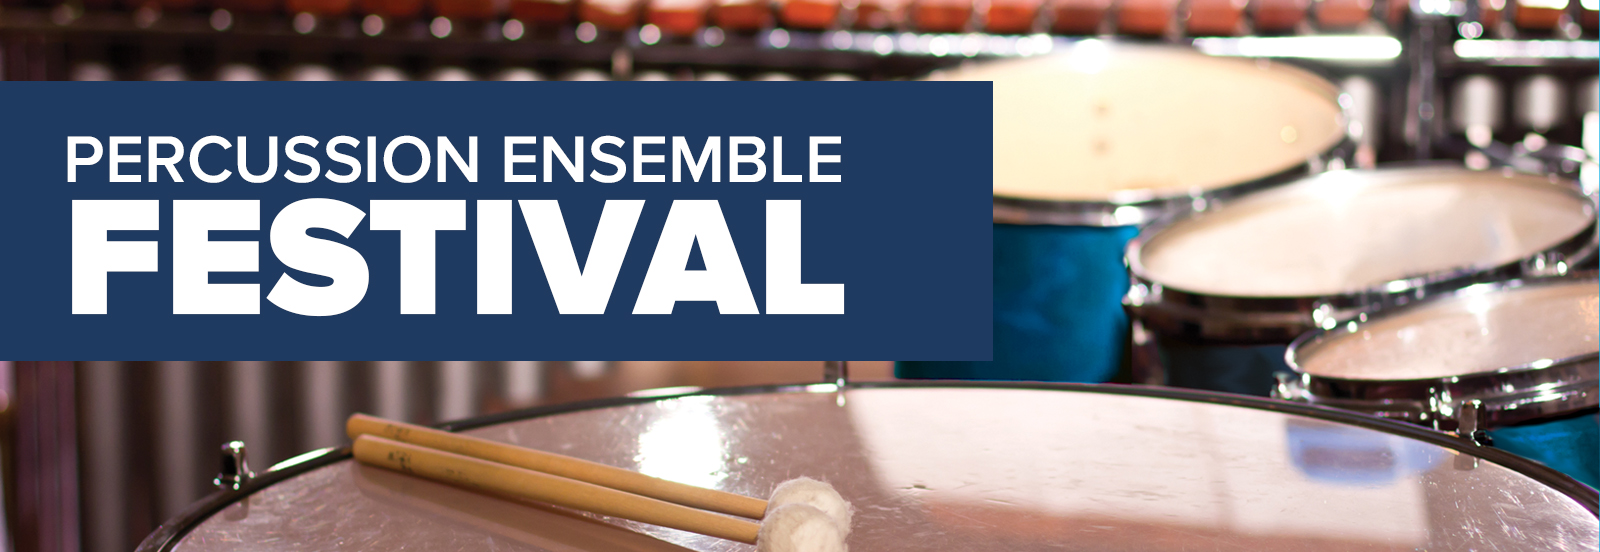 Percussion Ensemble Festival